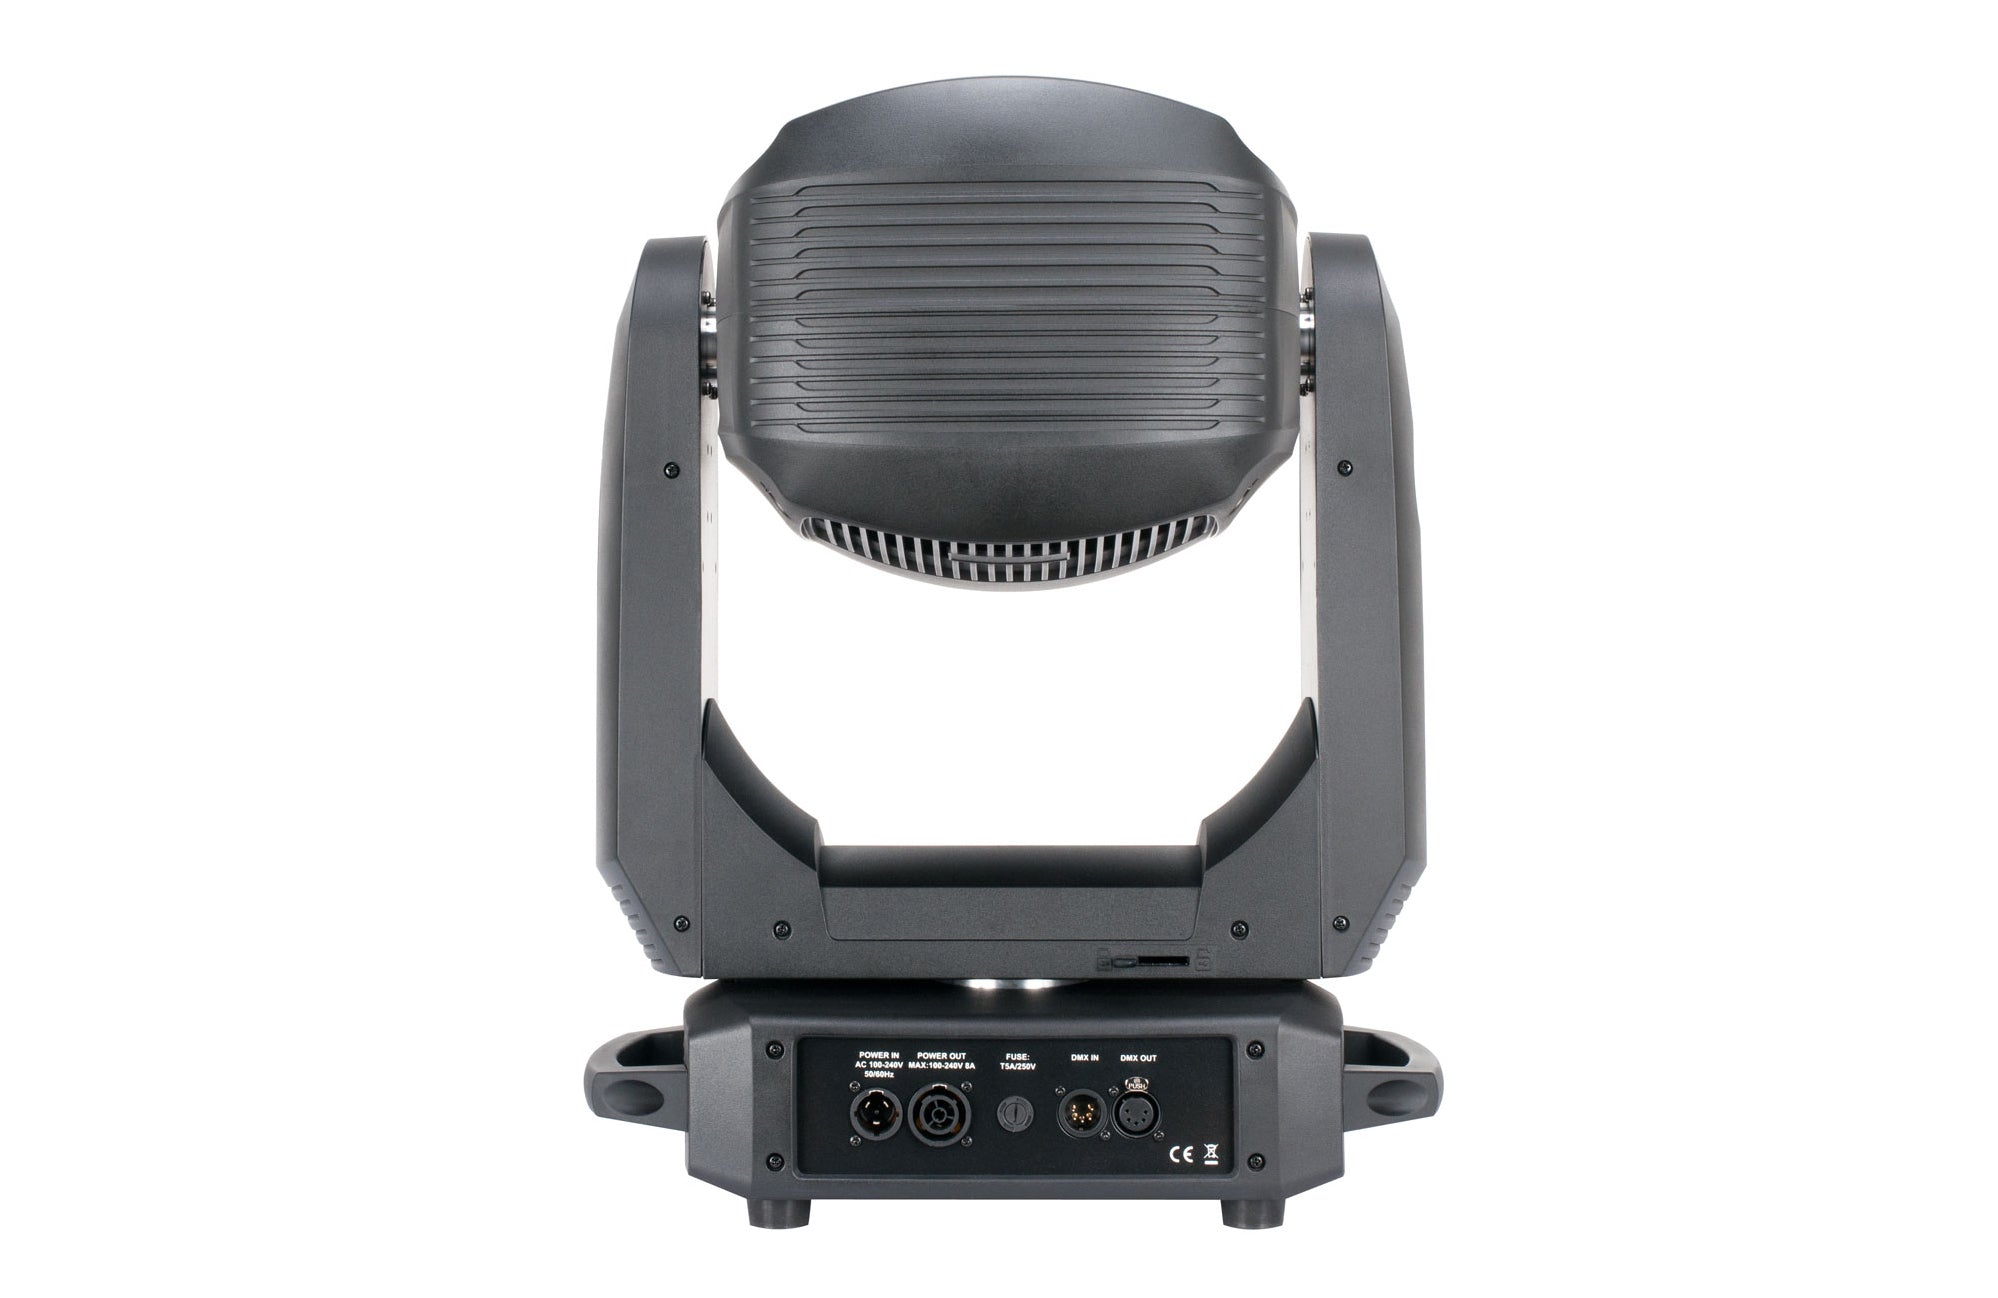 Elation FUZE SPOT 305W RGBAL LED Moving Head Spot Fixture with Zoom